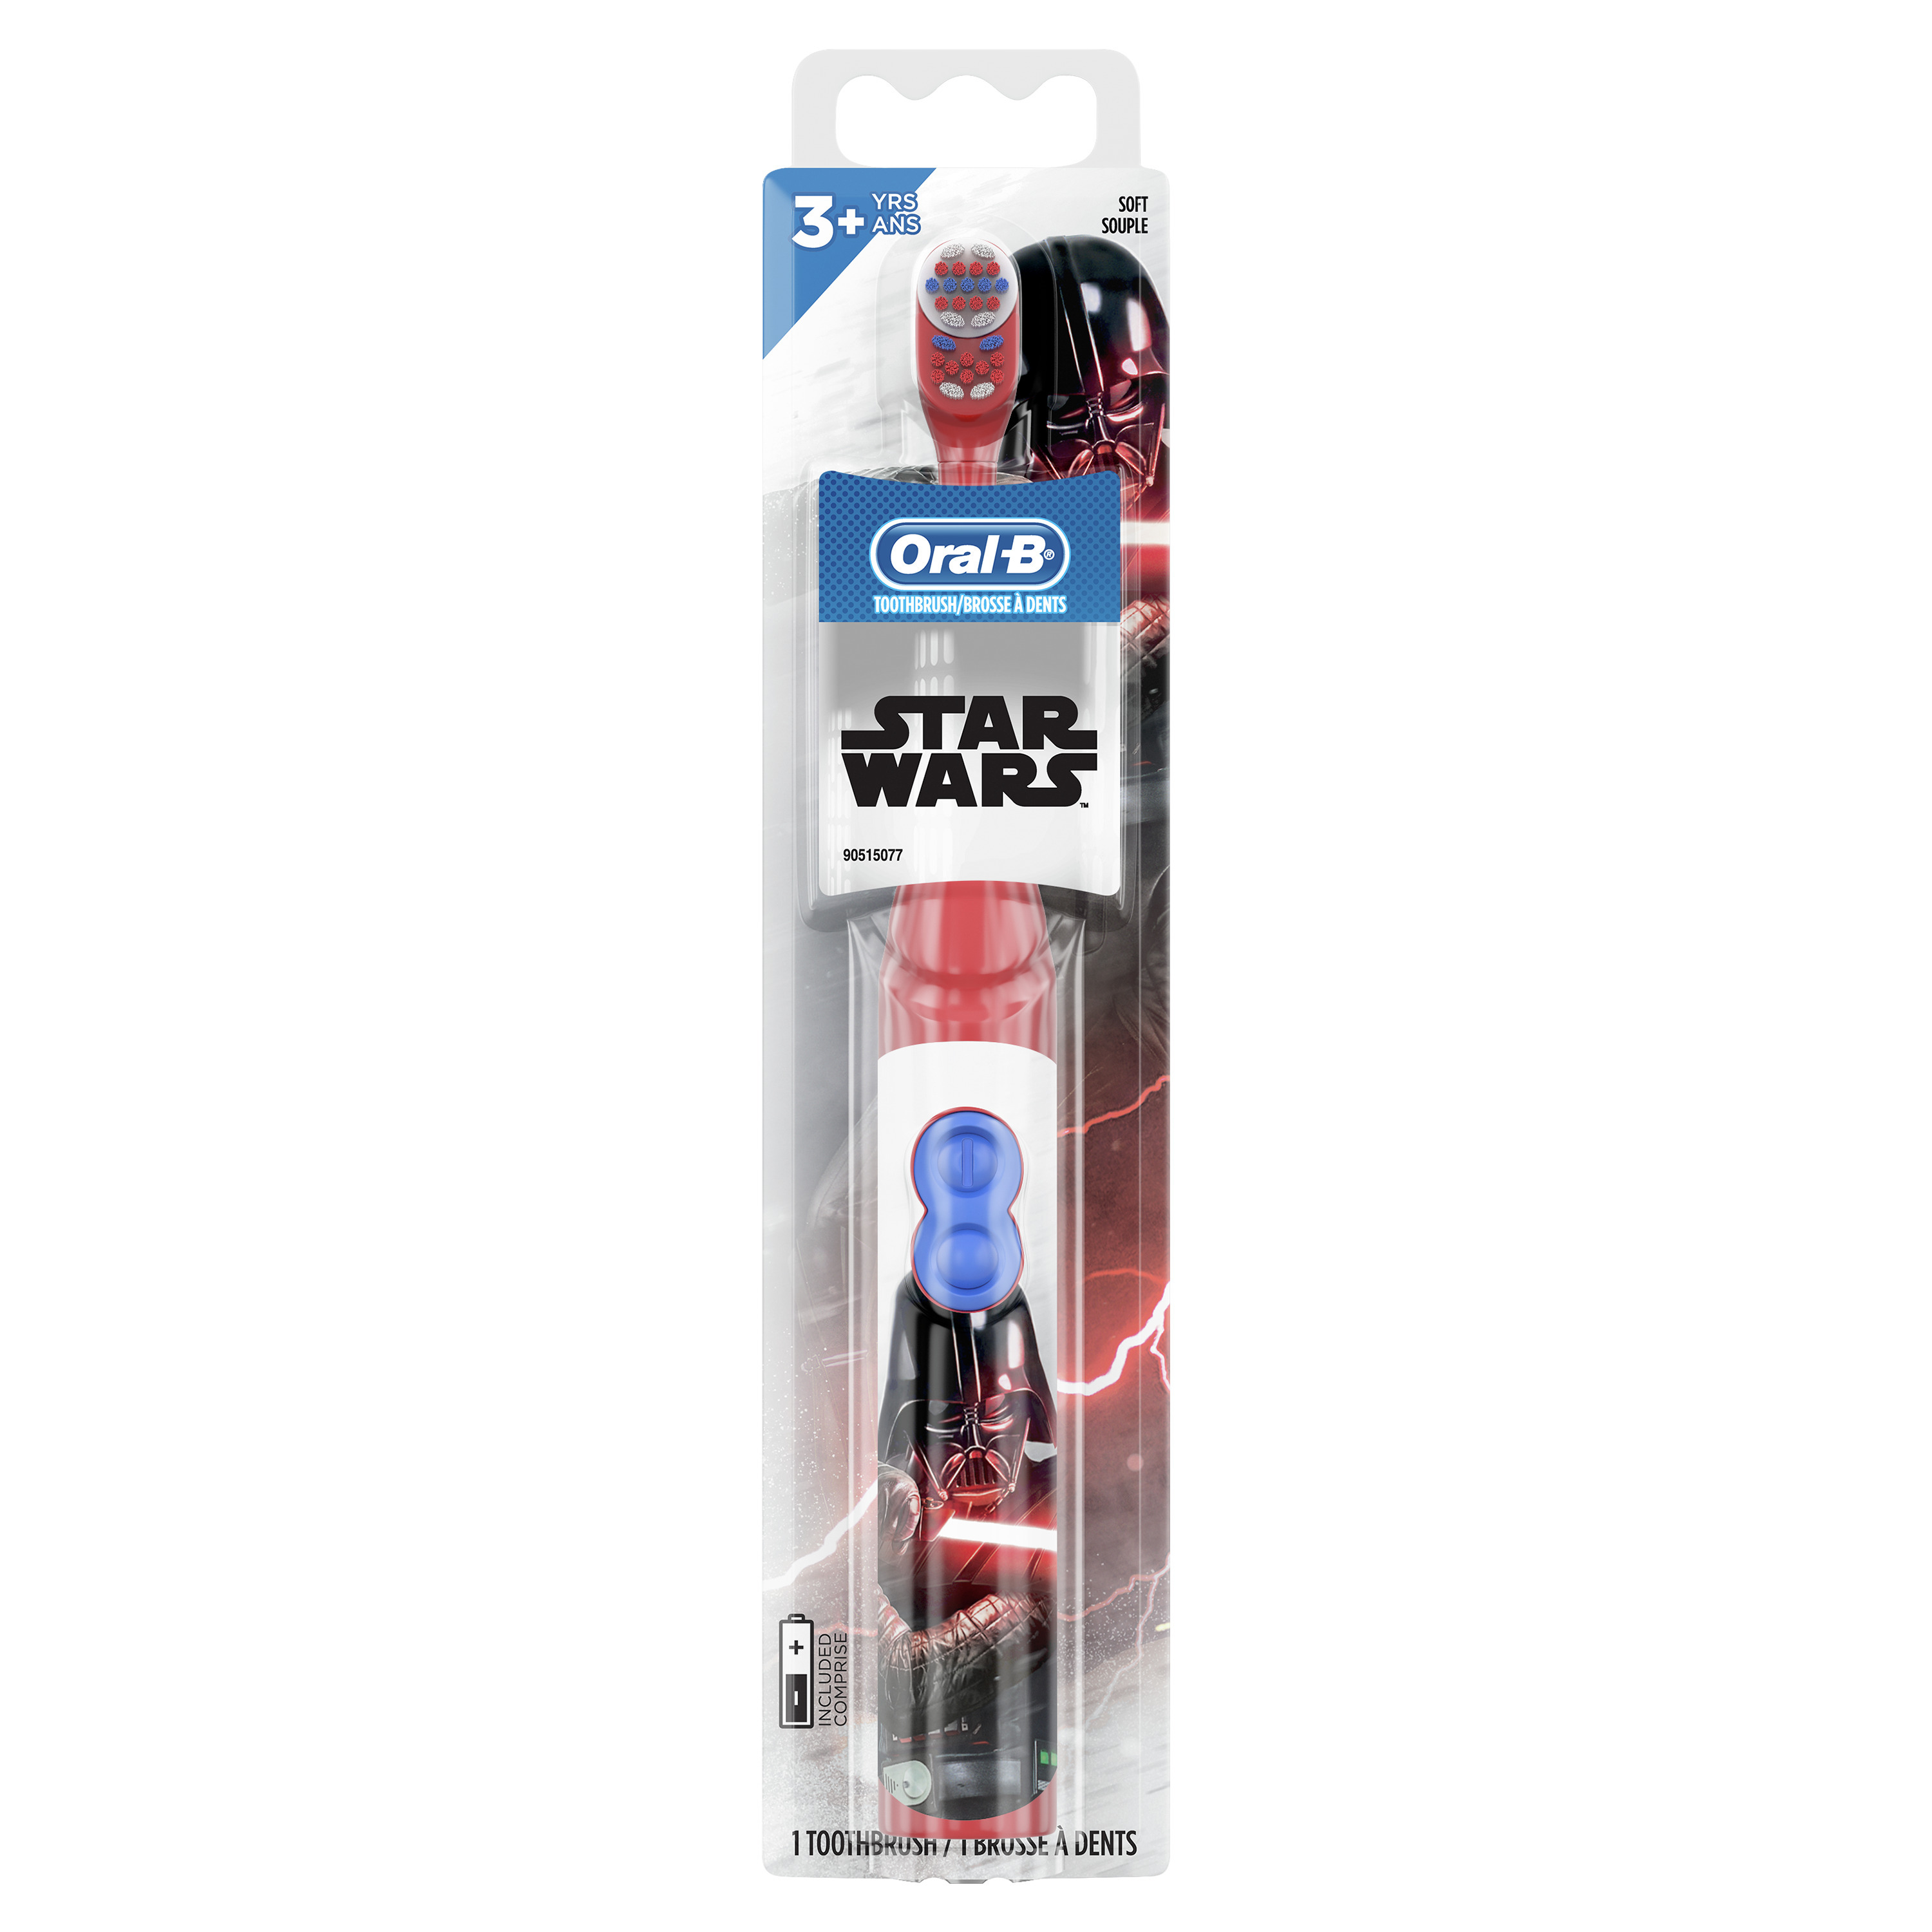 Oral-B Disney Star Wars Kids Battery Toothbrush, Extra Soft Bristles - image 1 of 9